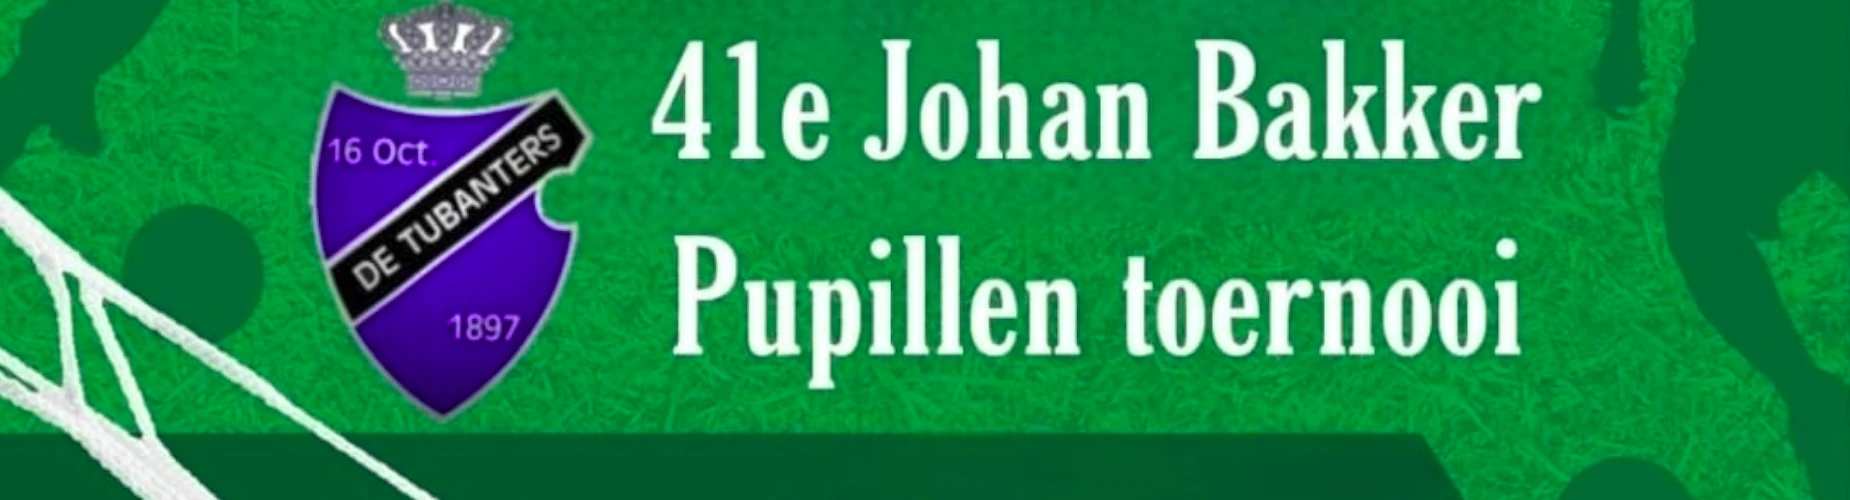 Banner - 41e Johan Bakker Pupillen Toernooi - Tubanters - Enschede